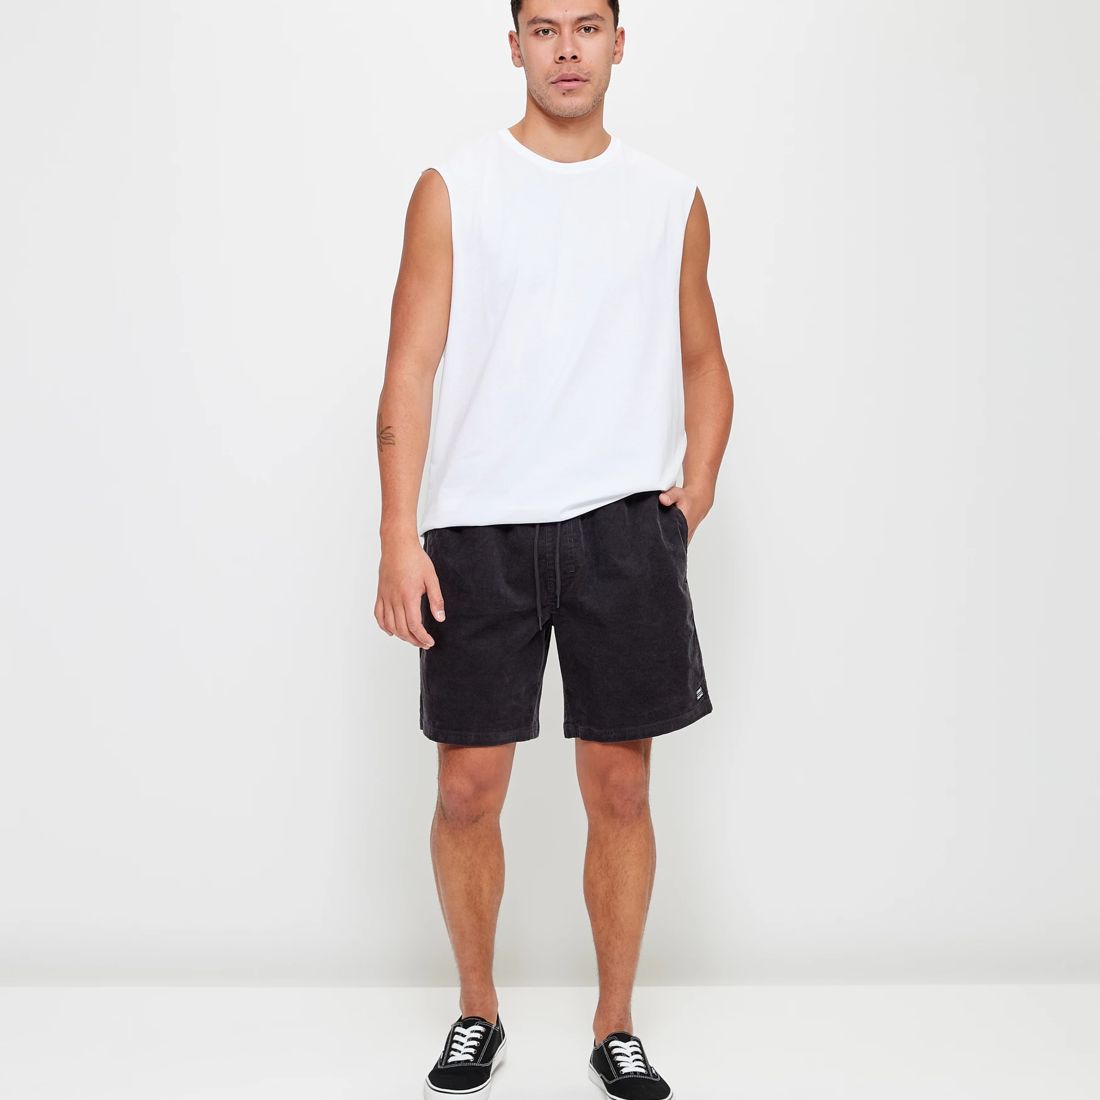 Commons Corduroy Shorts - Charcoal | Target Australia